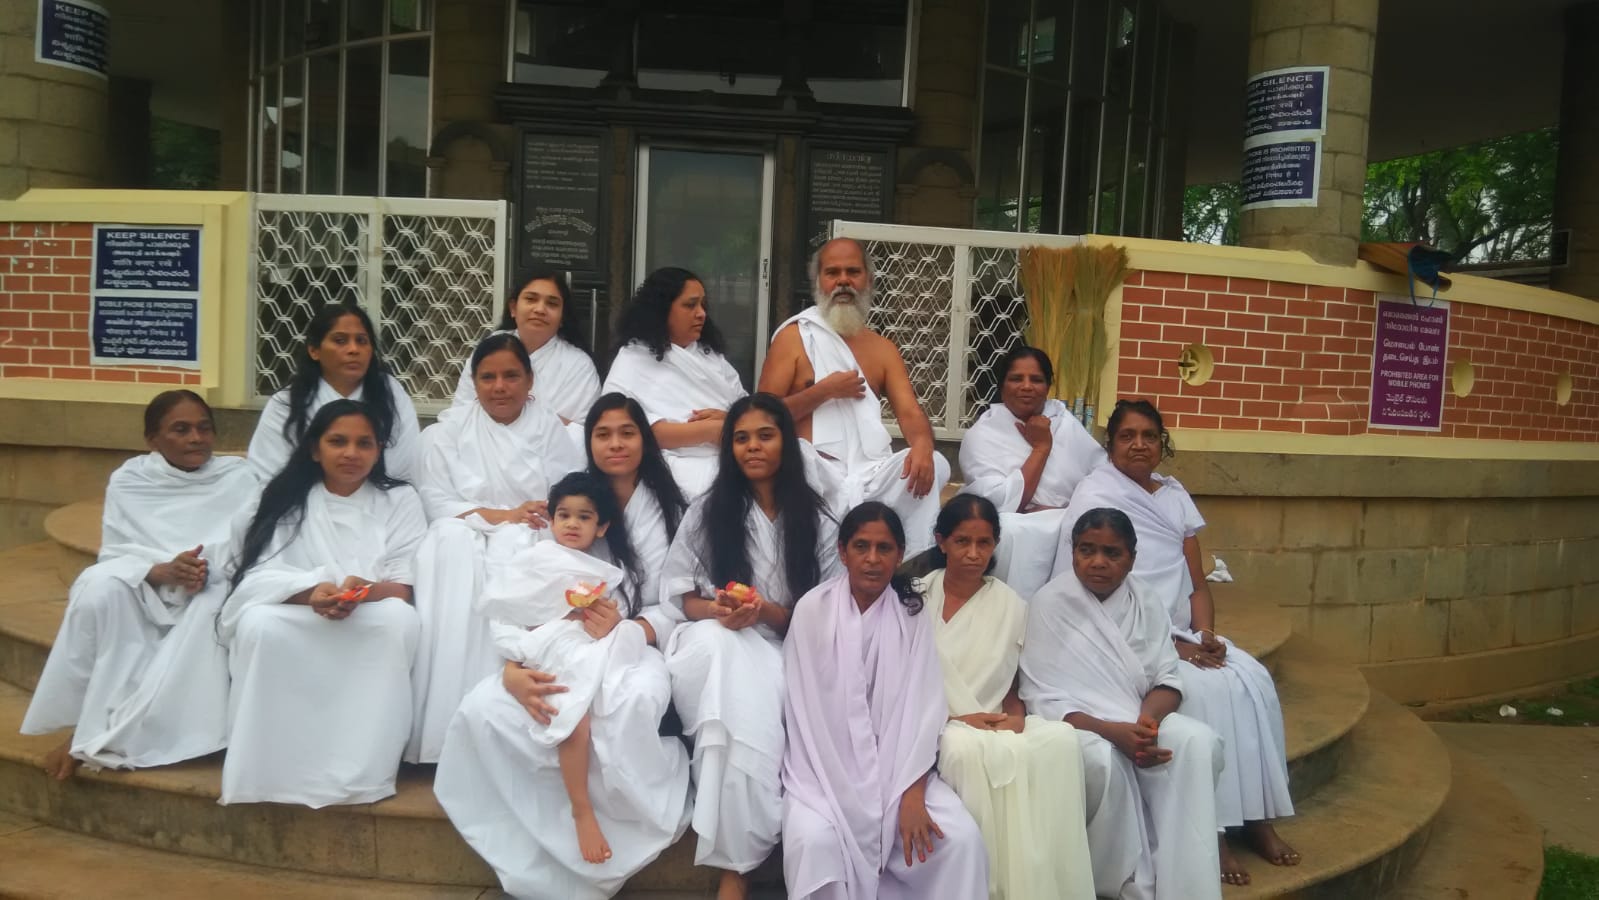 Sree Guruji with disciples visiting Badagara